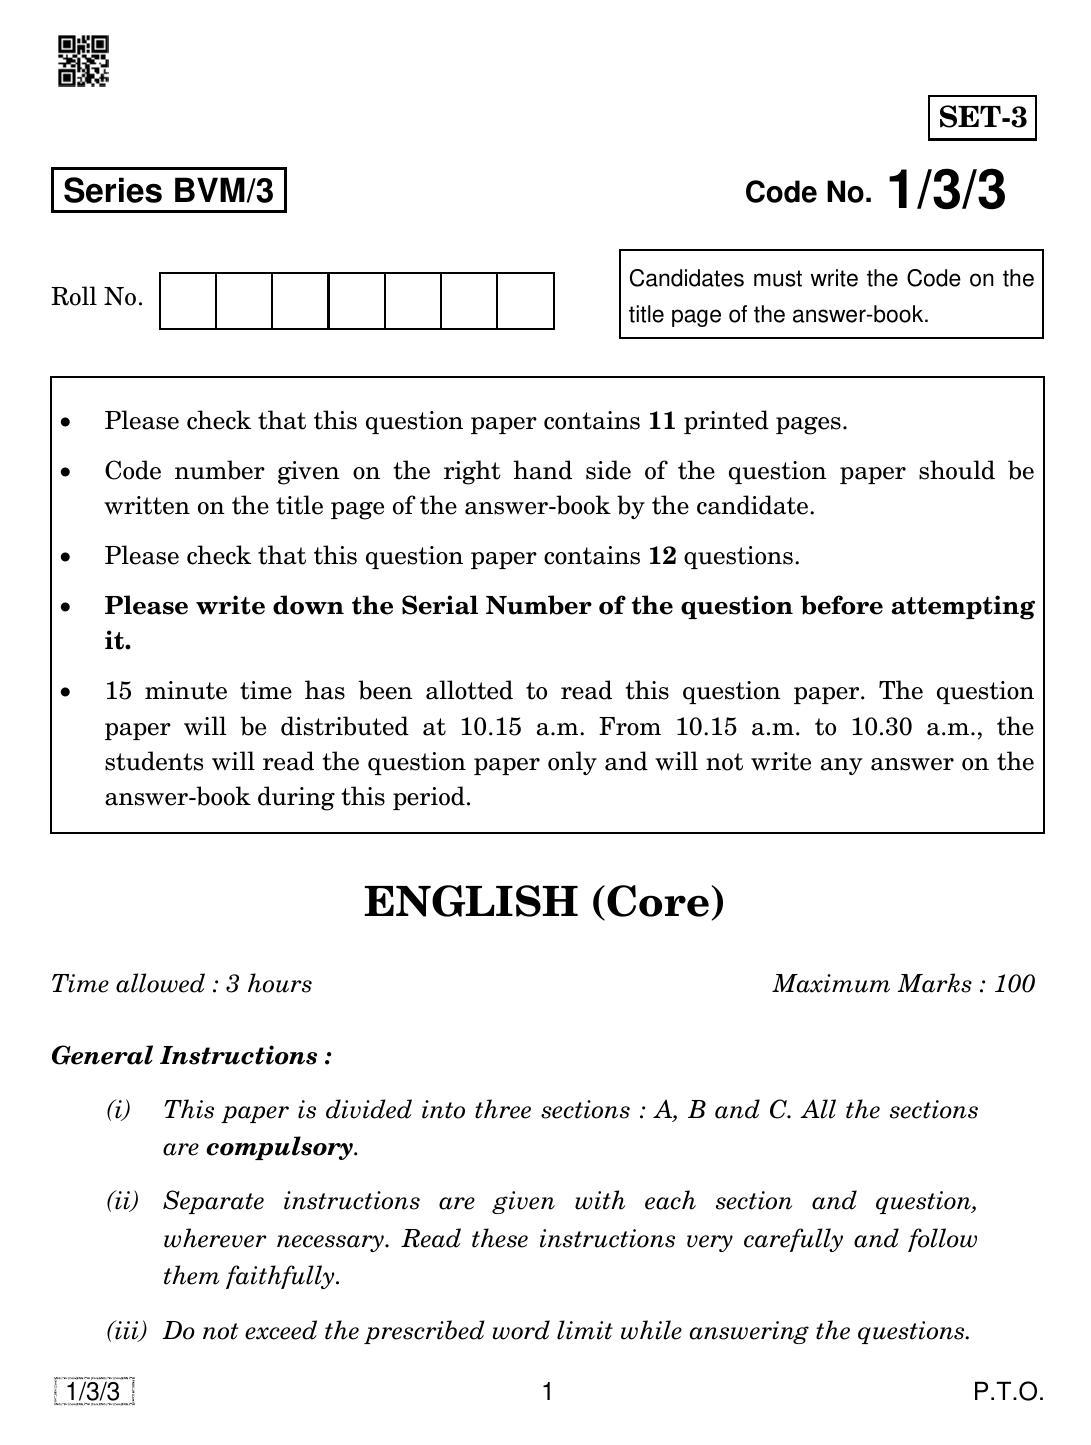 CBSE Class 12 1-3-3 English Core 2019 Question Paper - Page 1